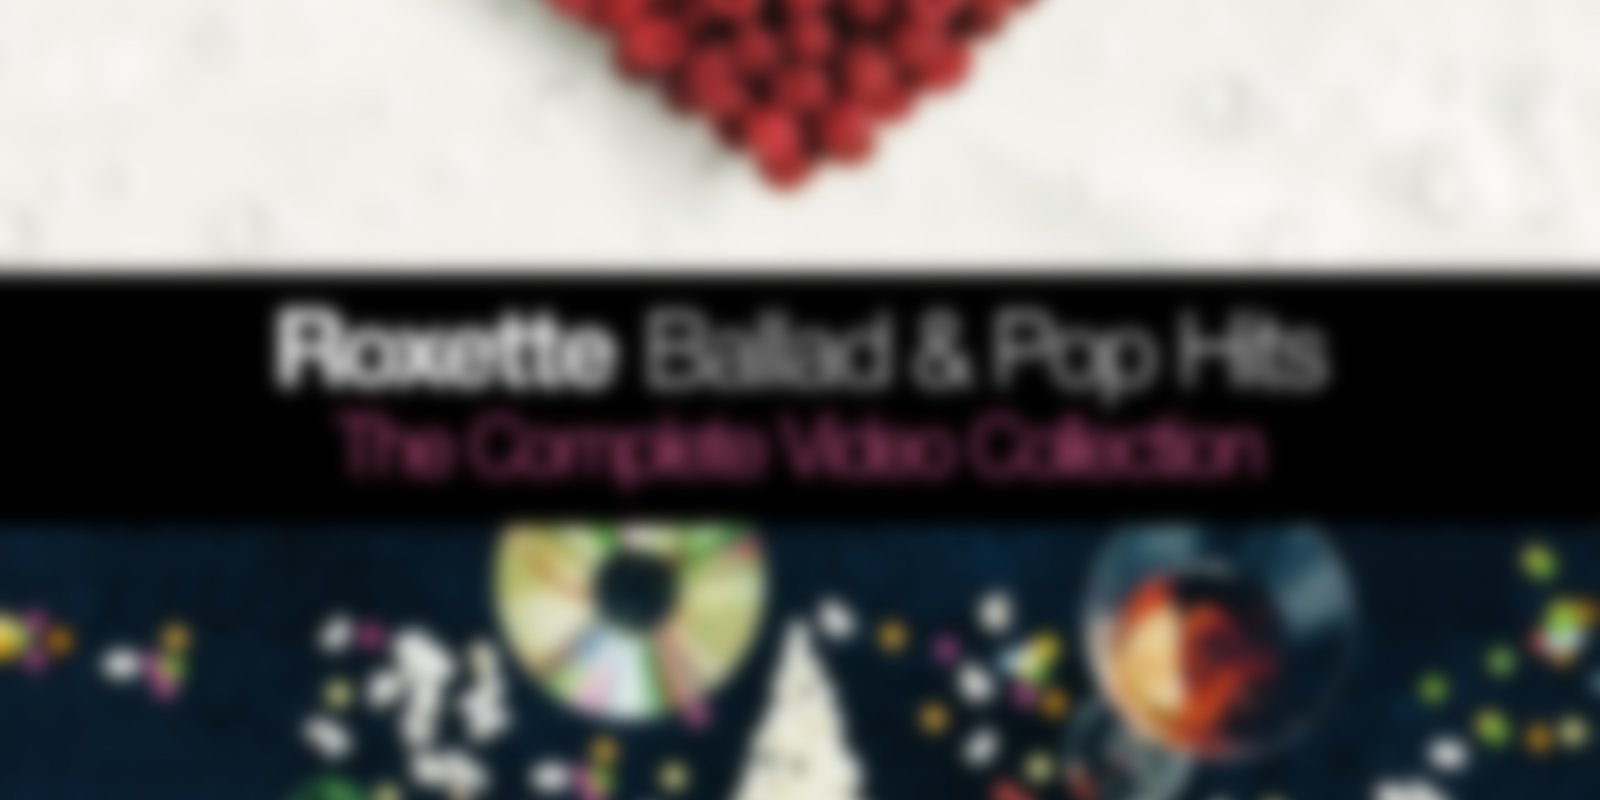 Roxette - Ballad & Pop Hits